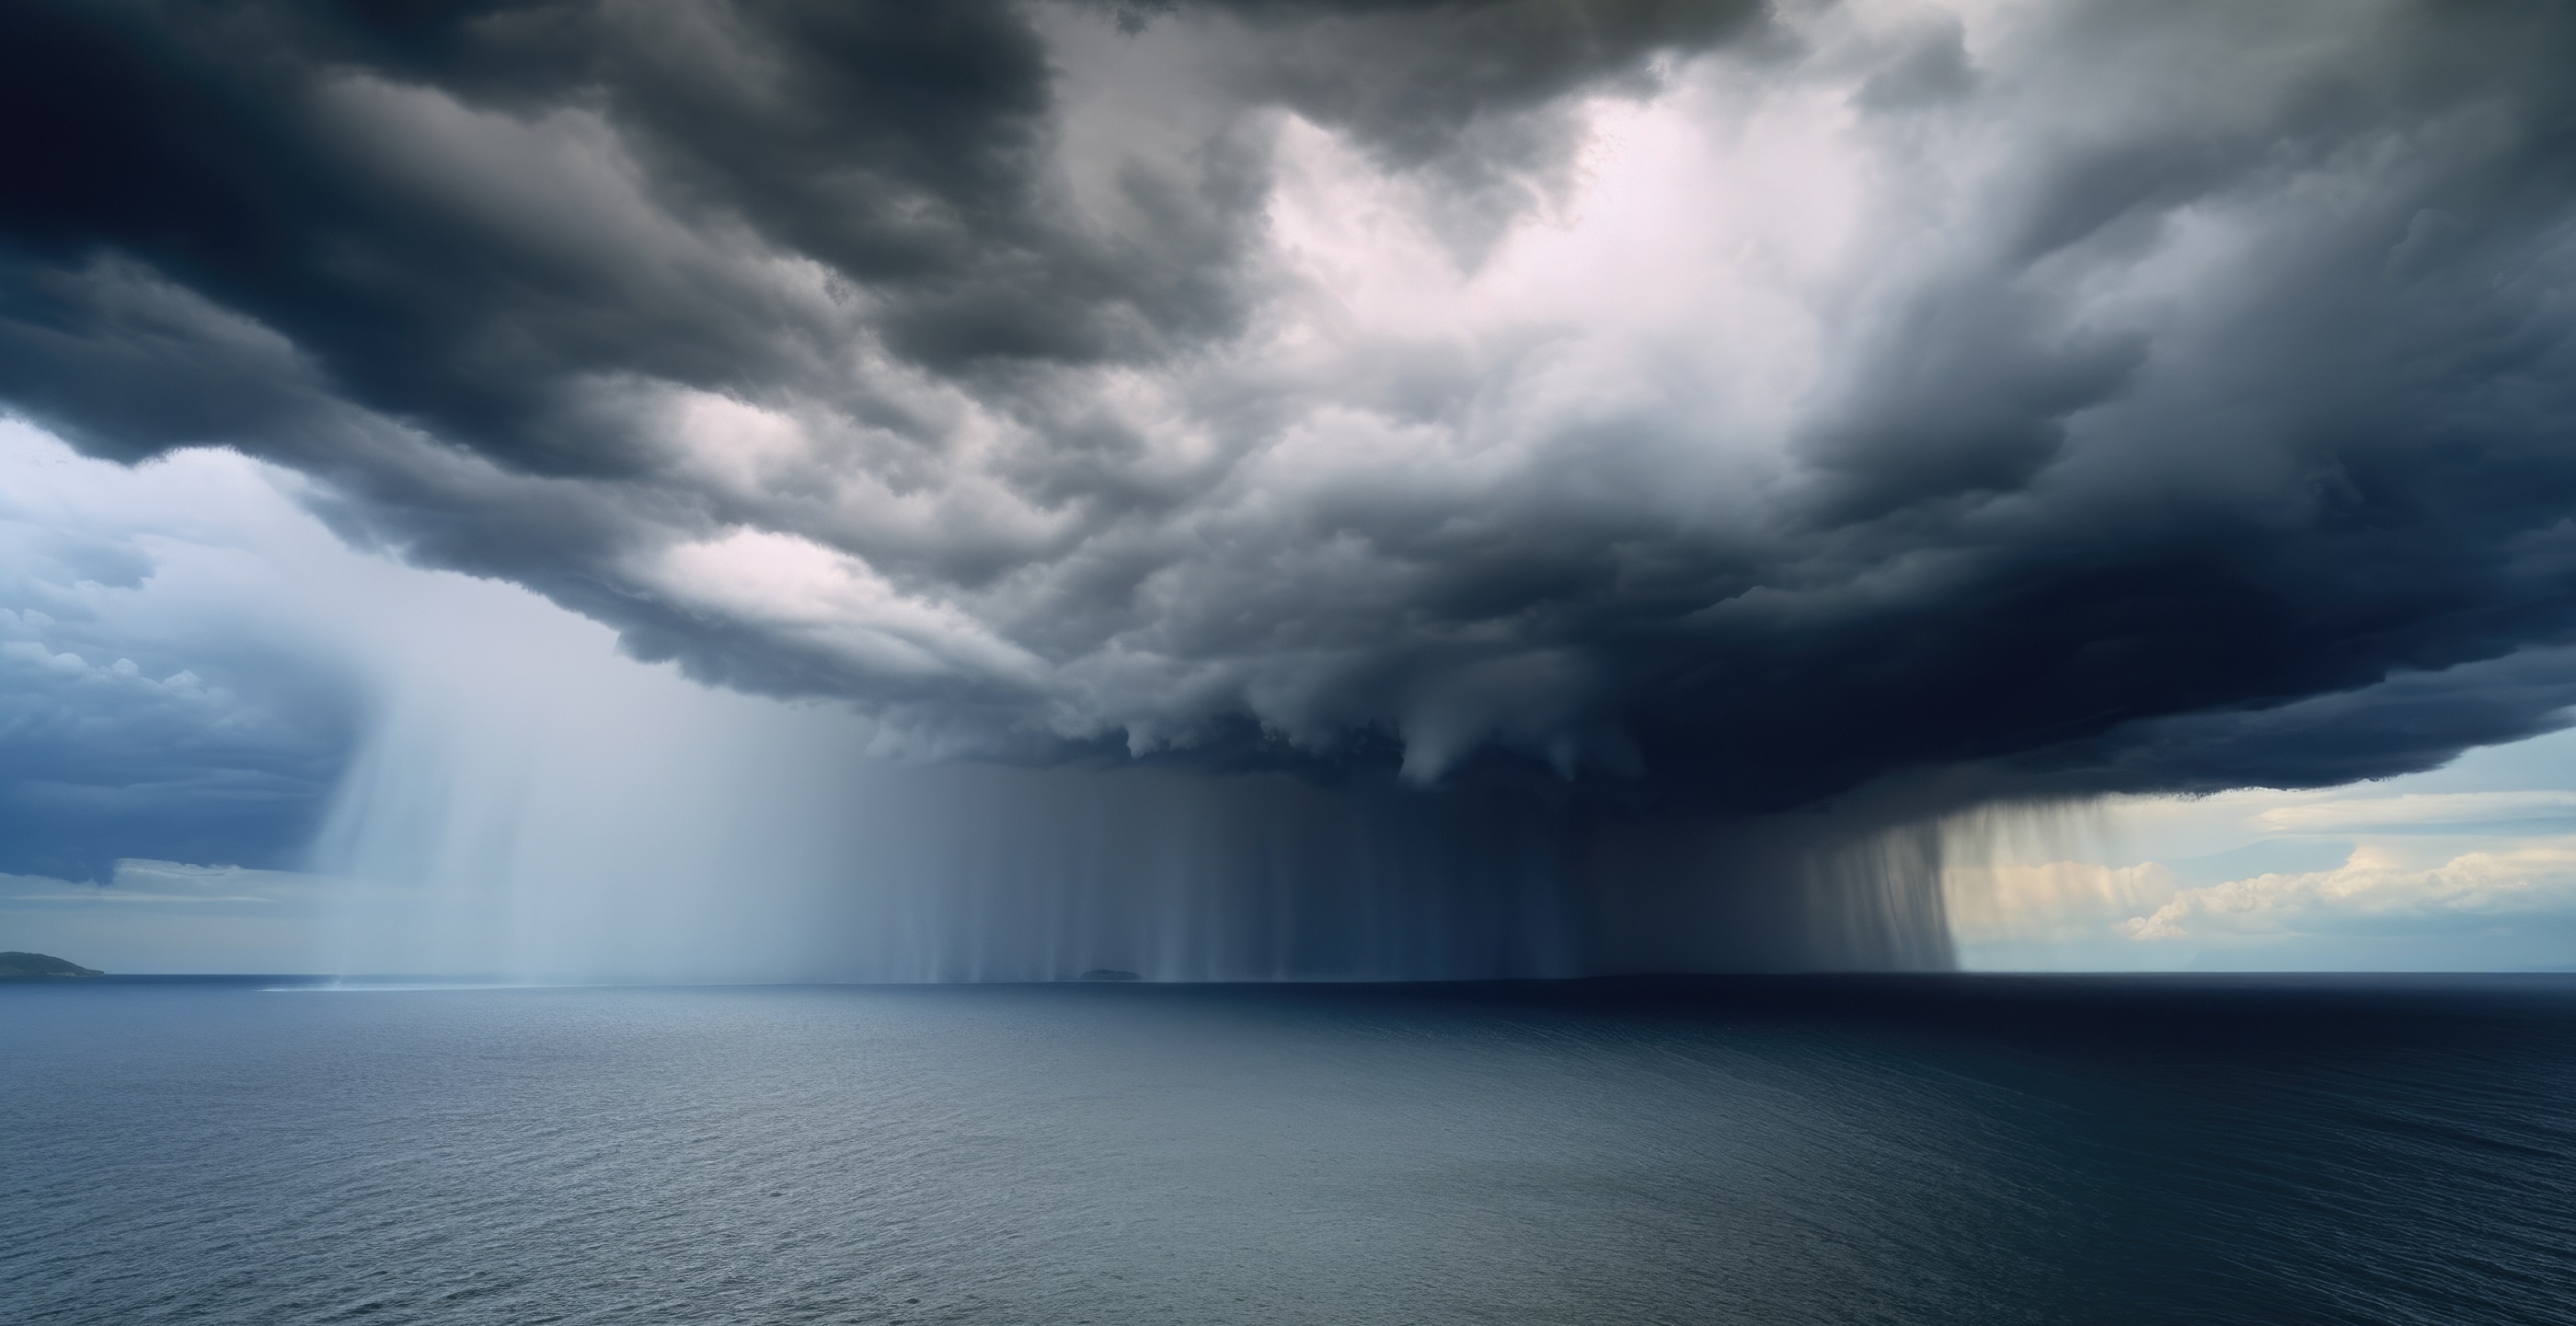 Un rideau de pluie sous un orage au-dessus de la mer. © Mimadeo, Adobe Stock